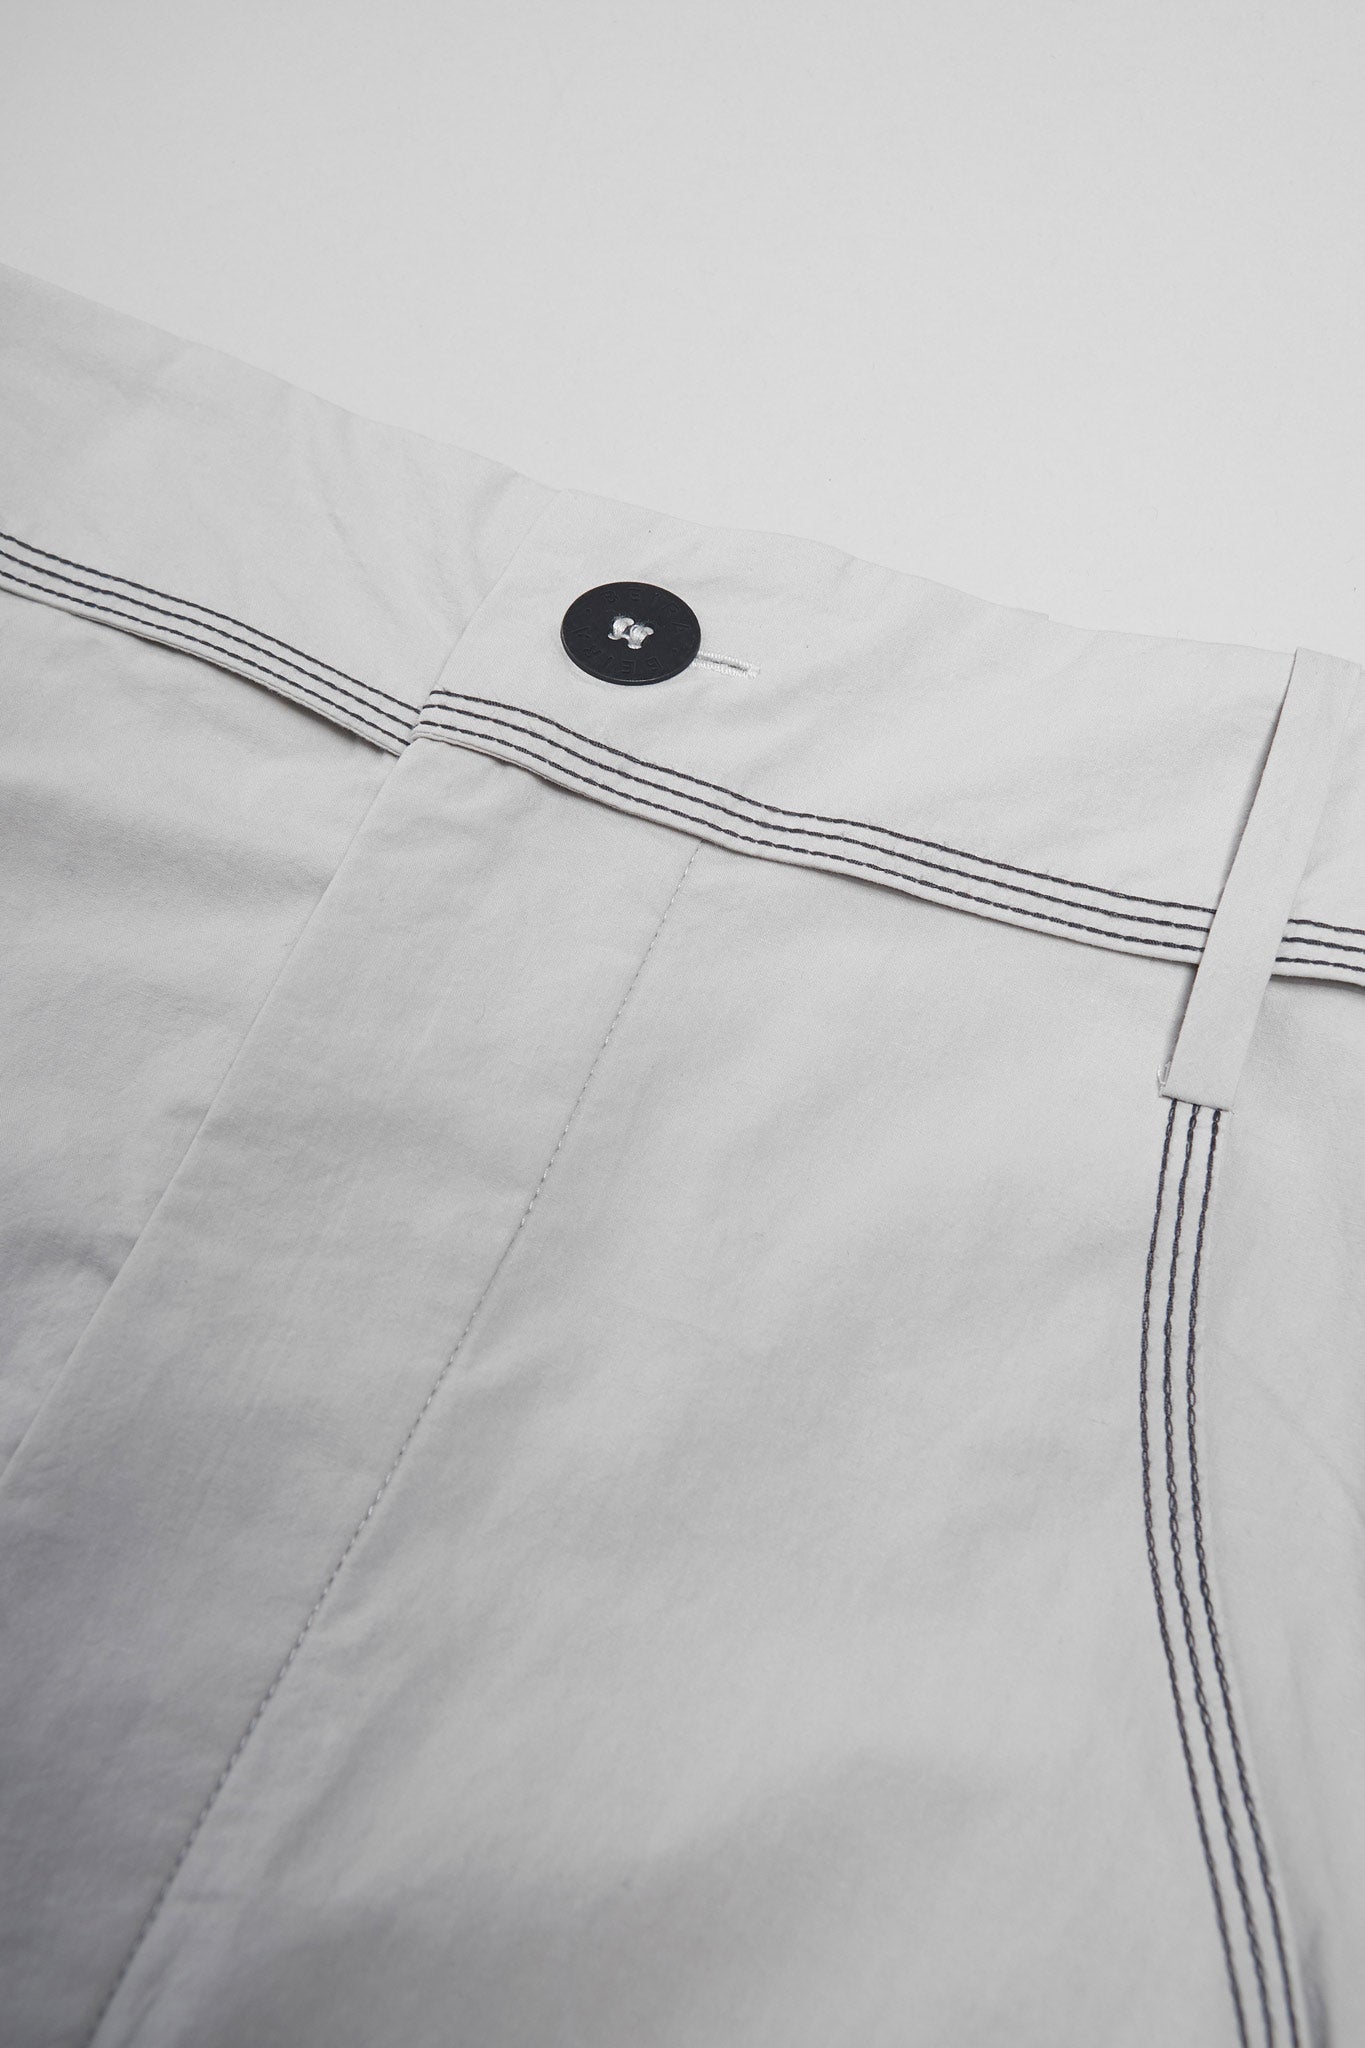 Cotton Waistband Pants - Grey